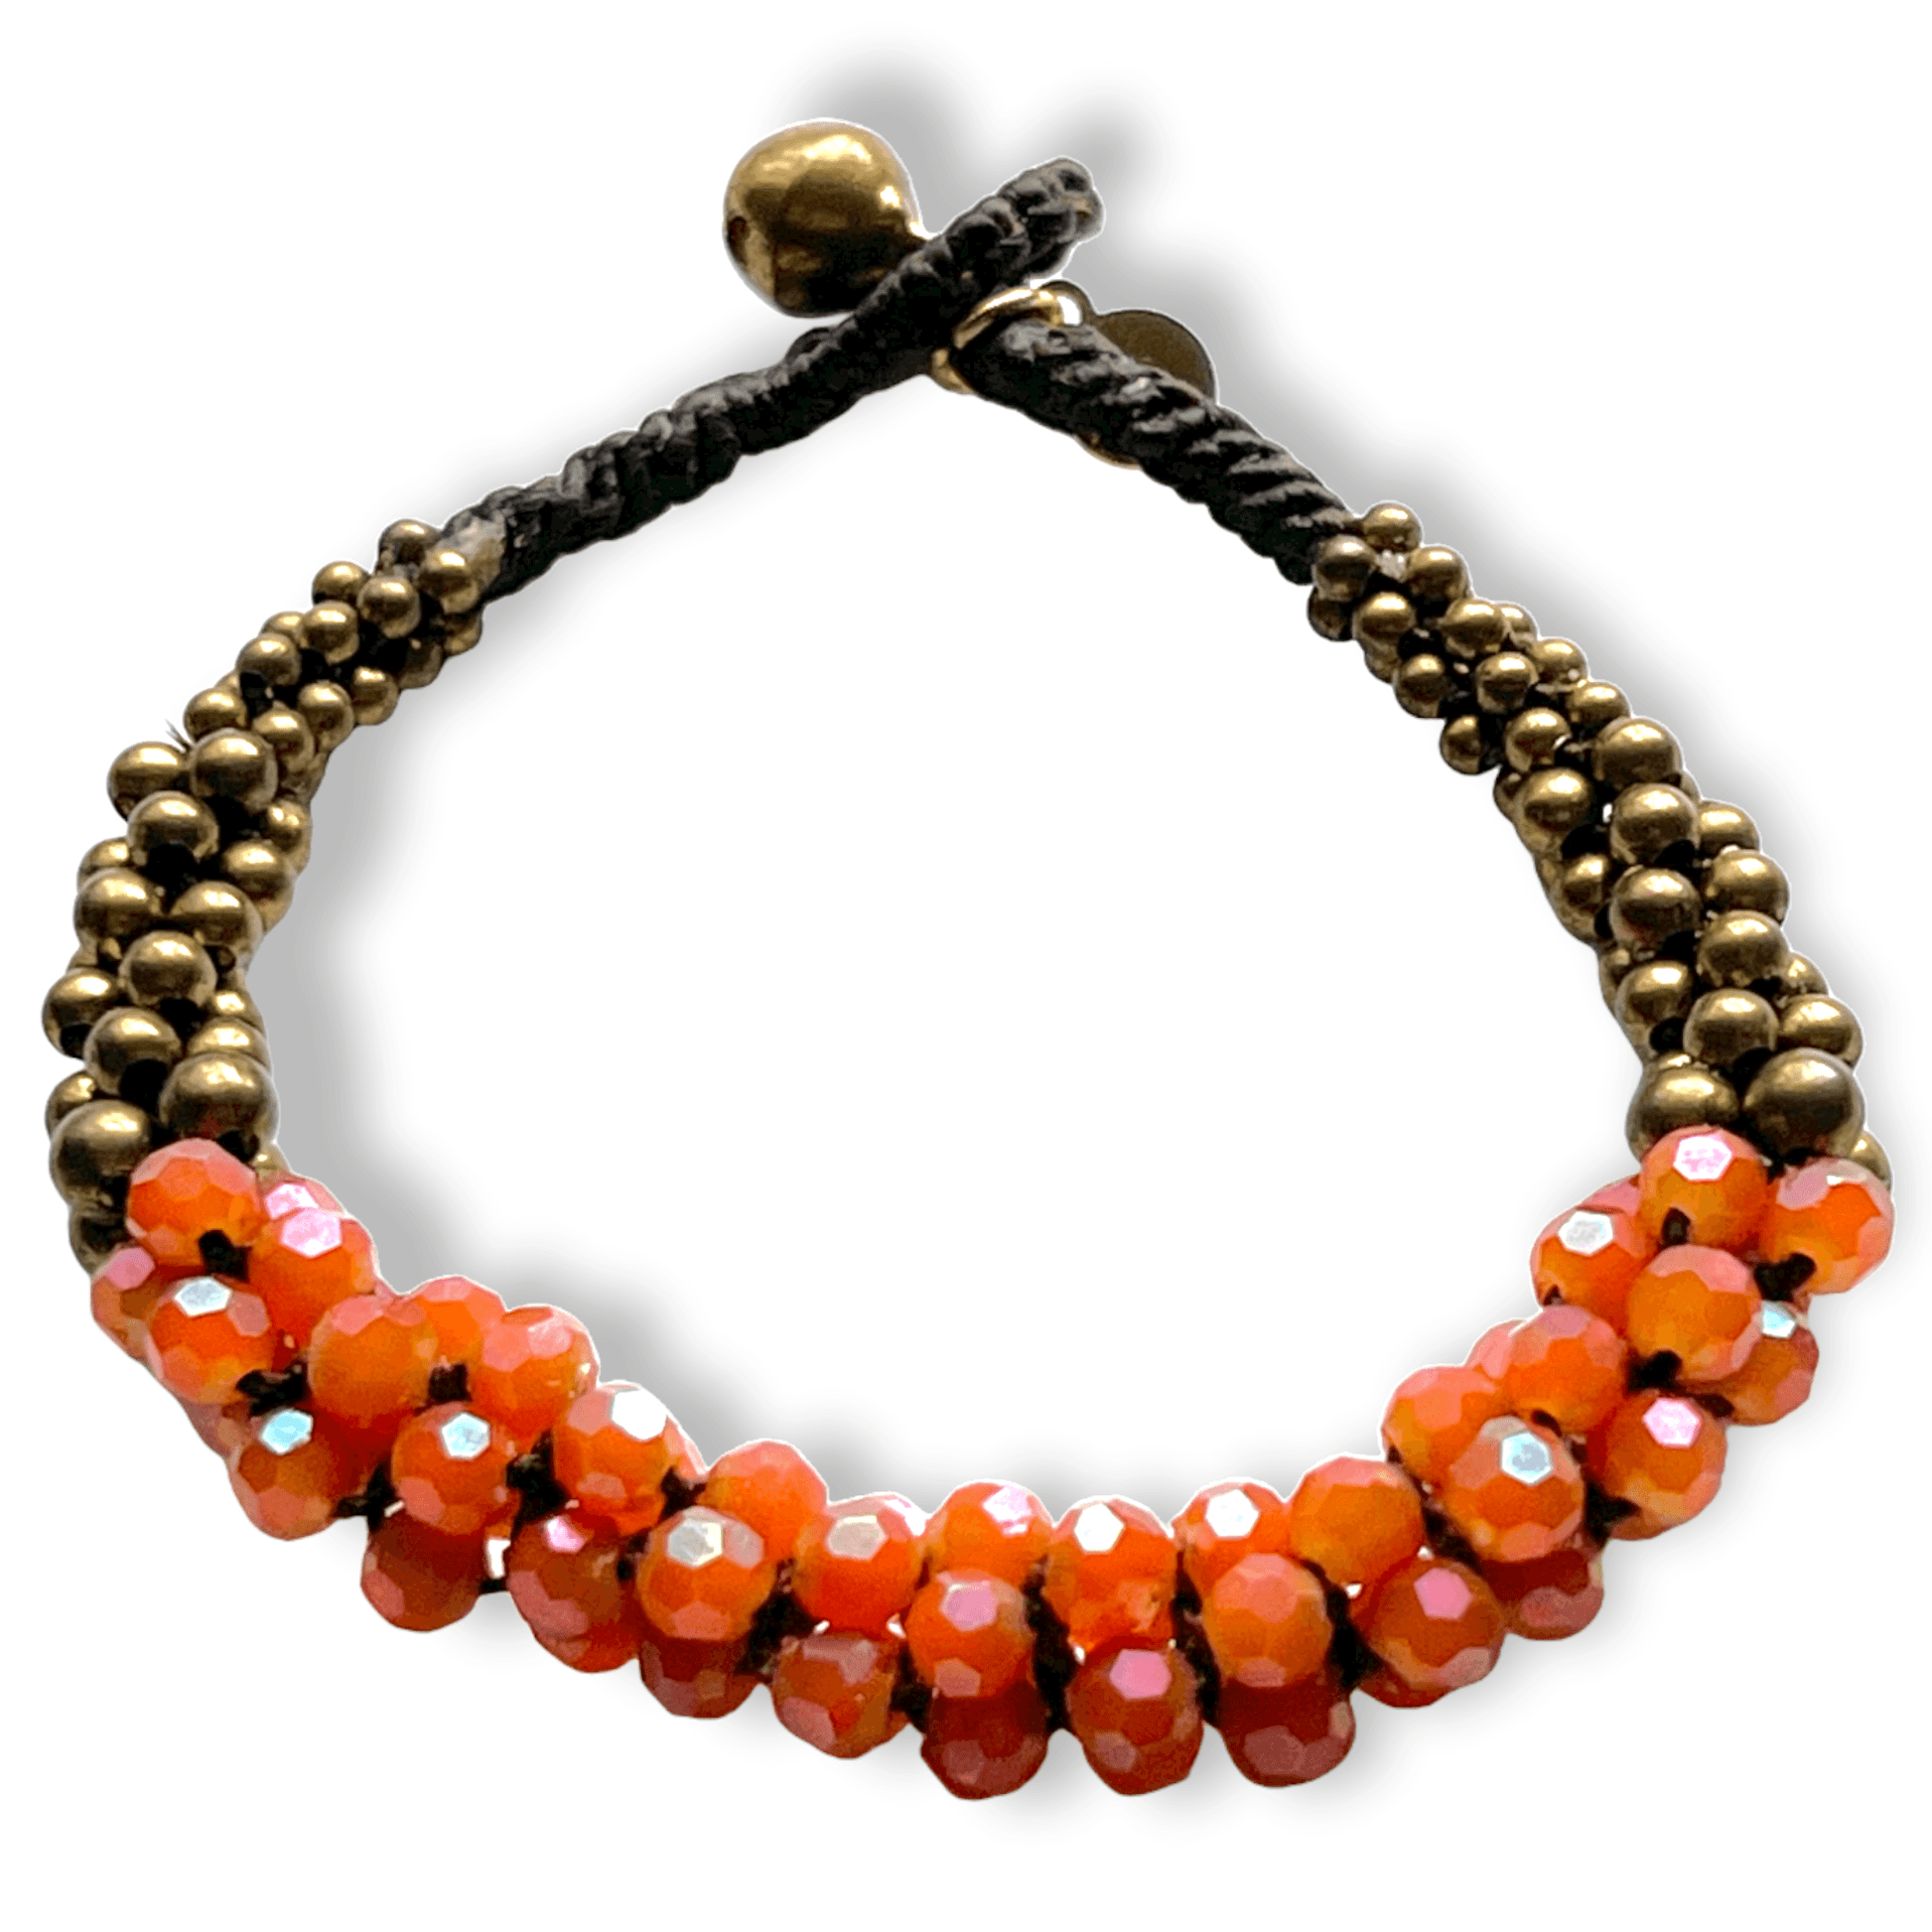 Tribal beaded bracelet with button clasp - Sundara Joon